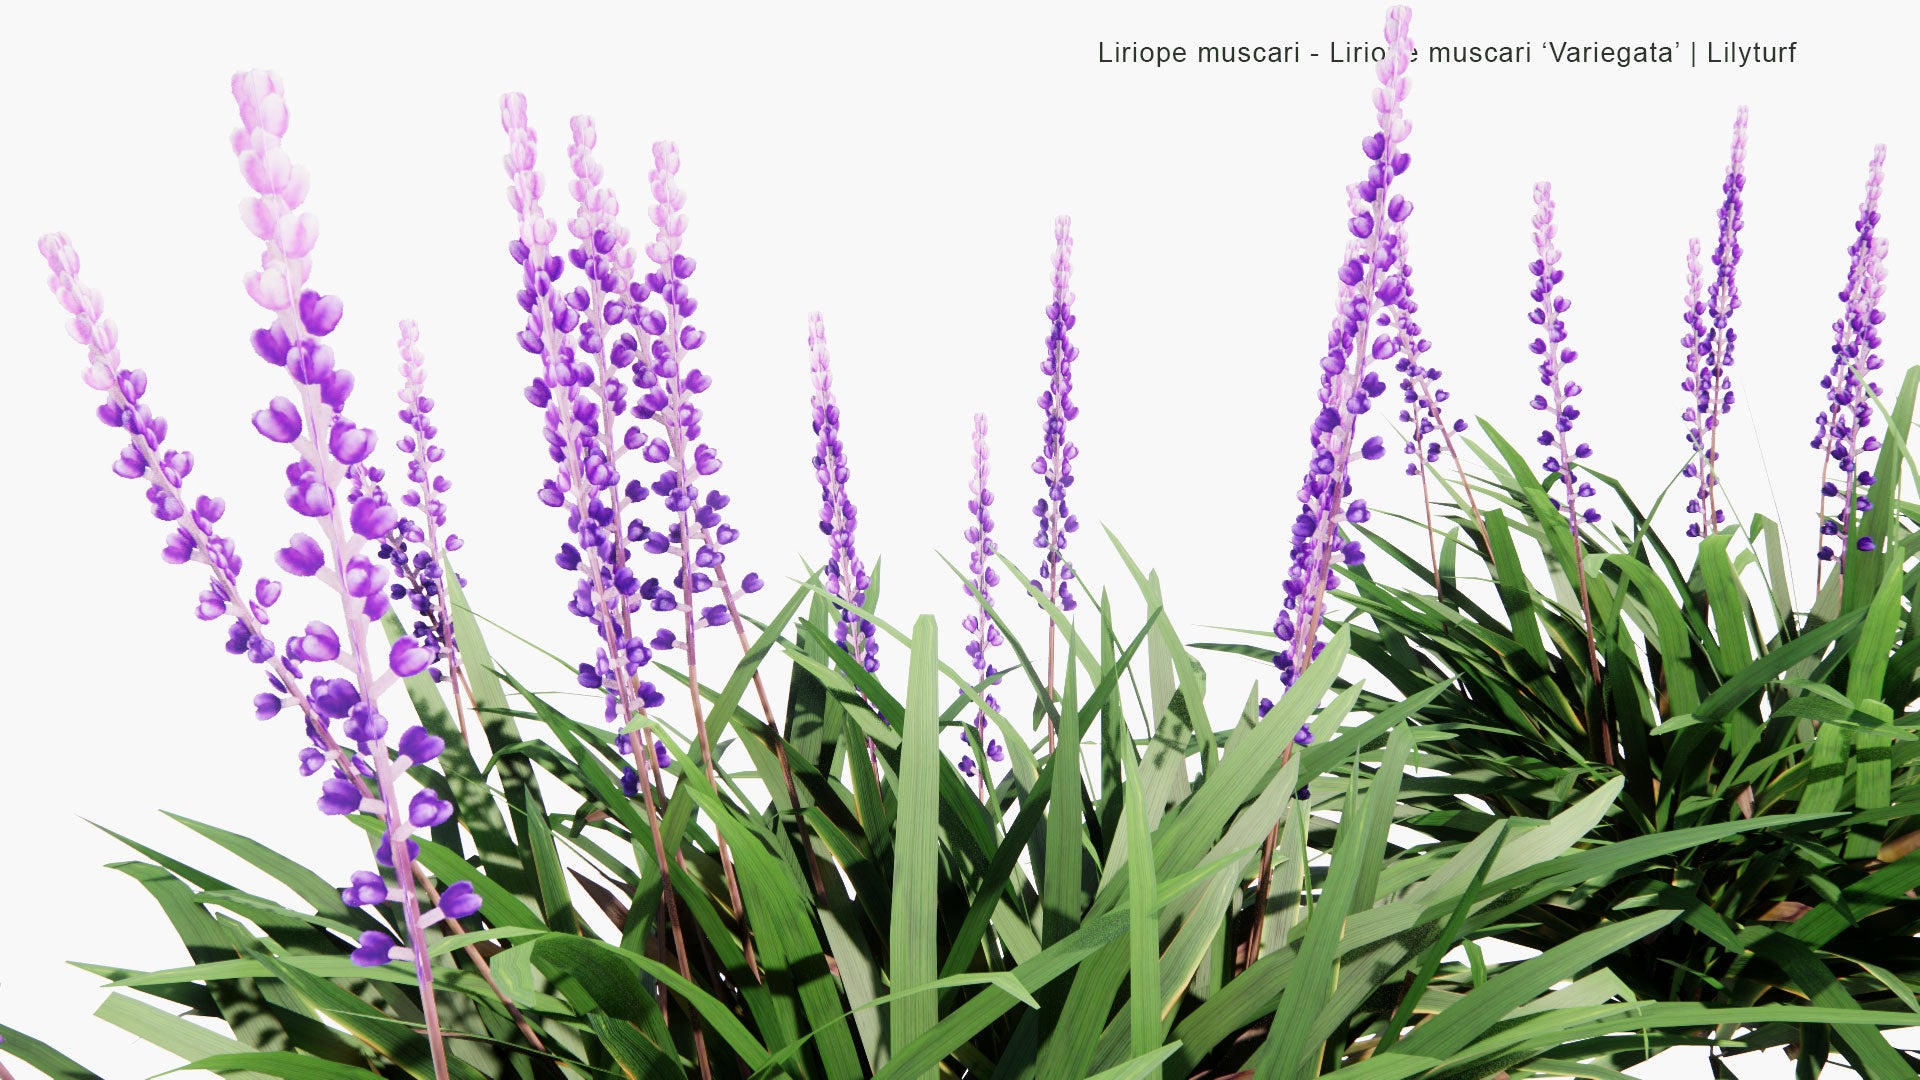 Low Poly Liriope Muscari, Liriope Muscari 'Variegata' - Big Blue Lilyturf, Lilyturf, Border Grass, Monkey Grass (3D Model)